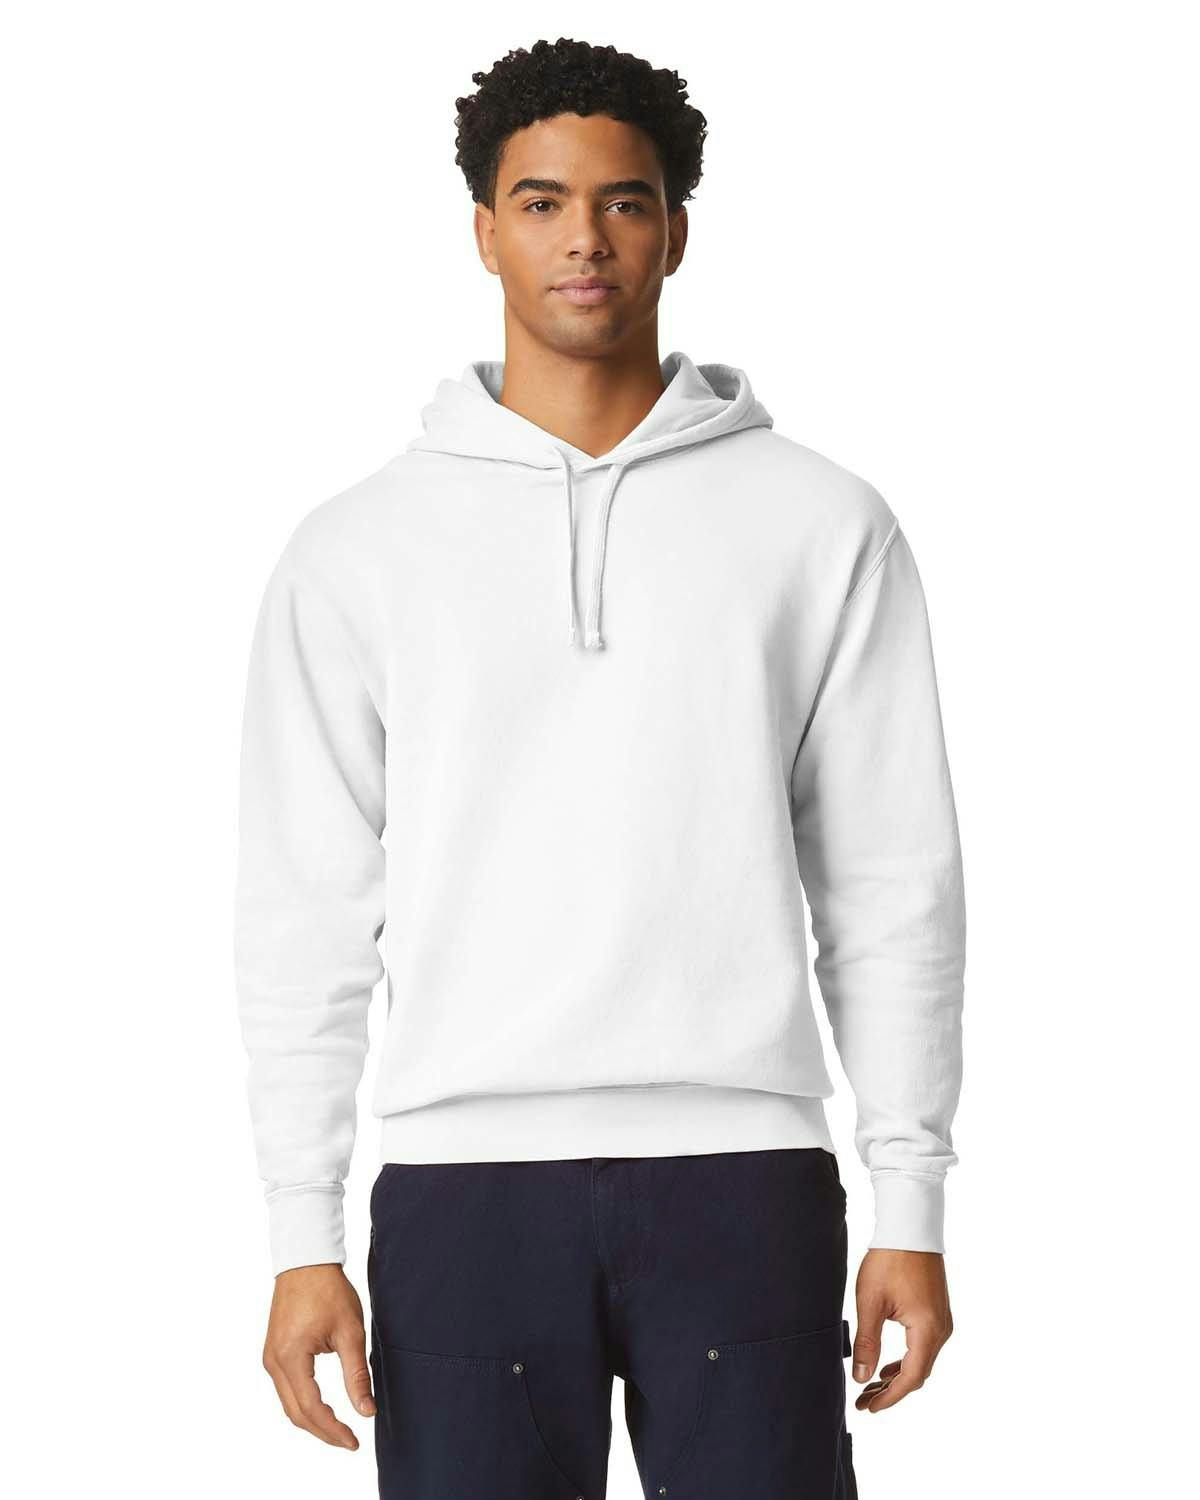 Image for Unisex Lighweight Cotton Hooded Sweatshirt